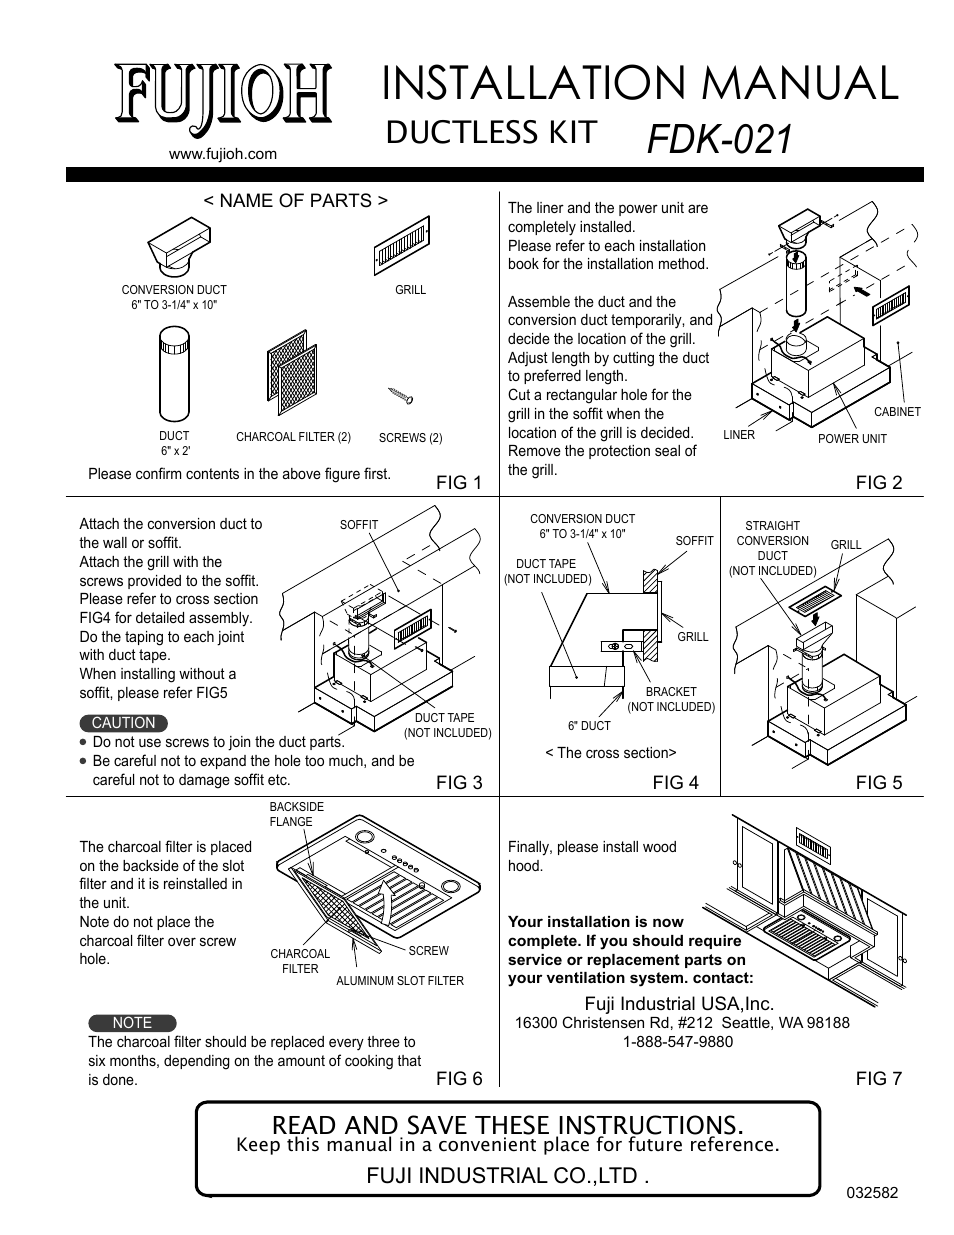 Fujioh FDK-021 User Manual | 1 page